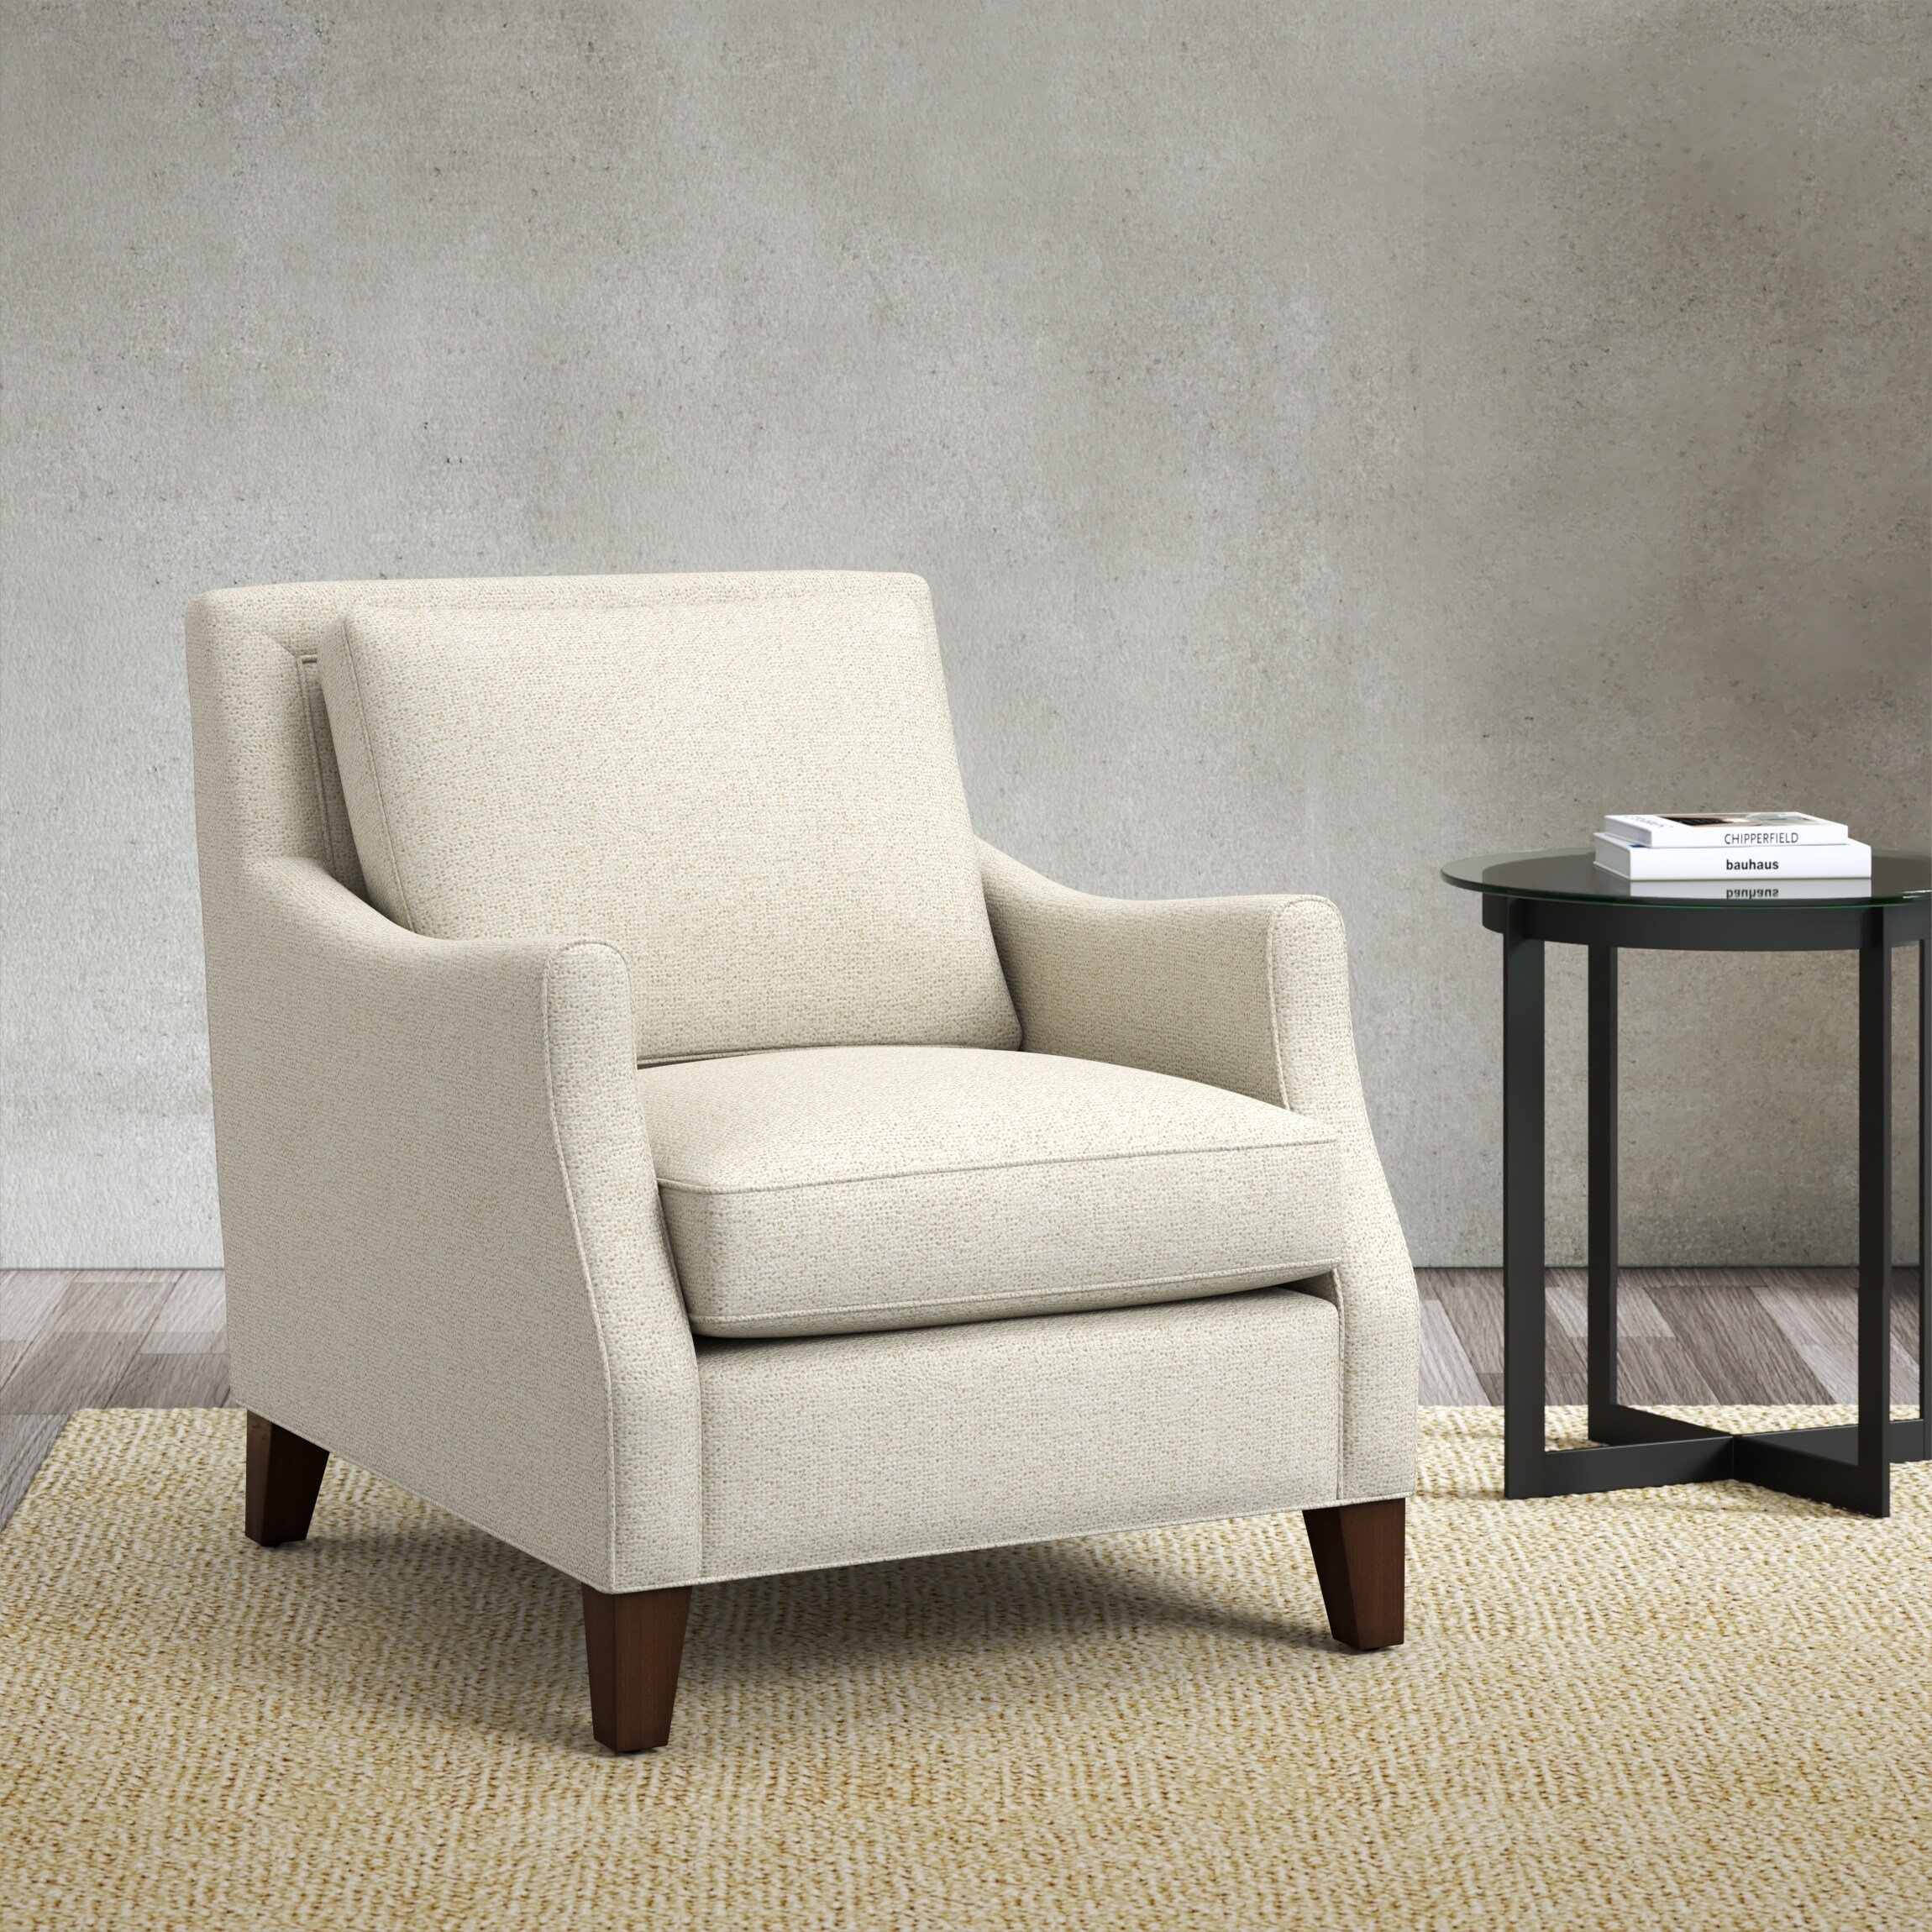 Morgan Chair in 100% Performance Linen Fabric